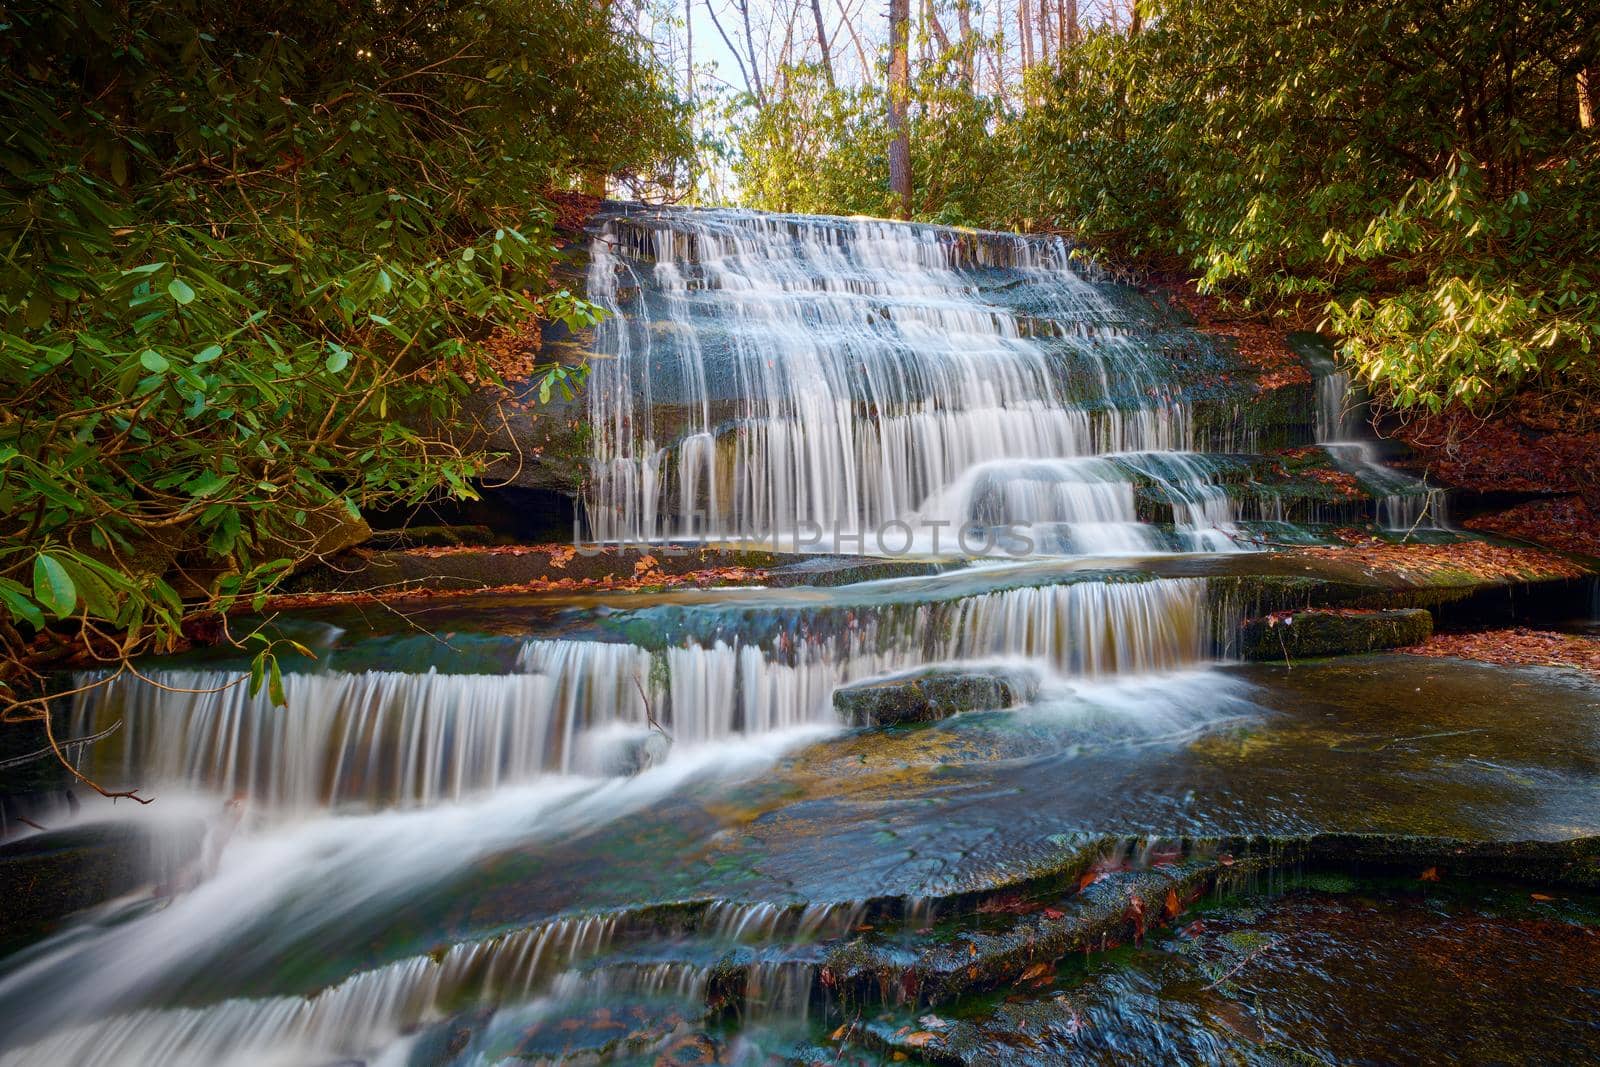 Grogan Creek Falls (or Falls on Grogan Creek) located in Pisgah National Forest near Brevard NC. by patrickstock